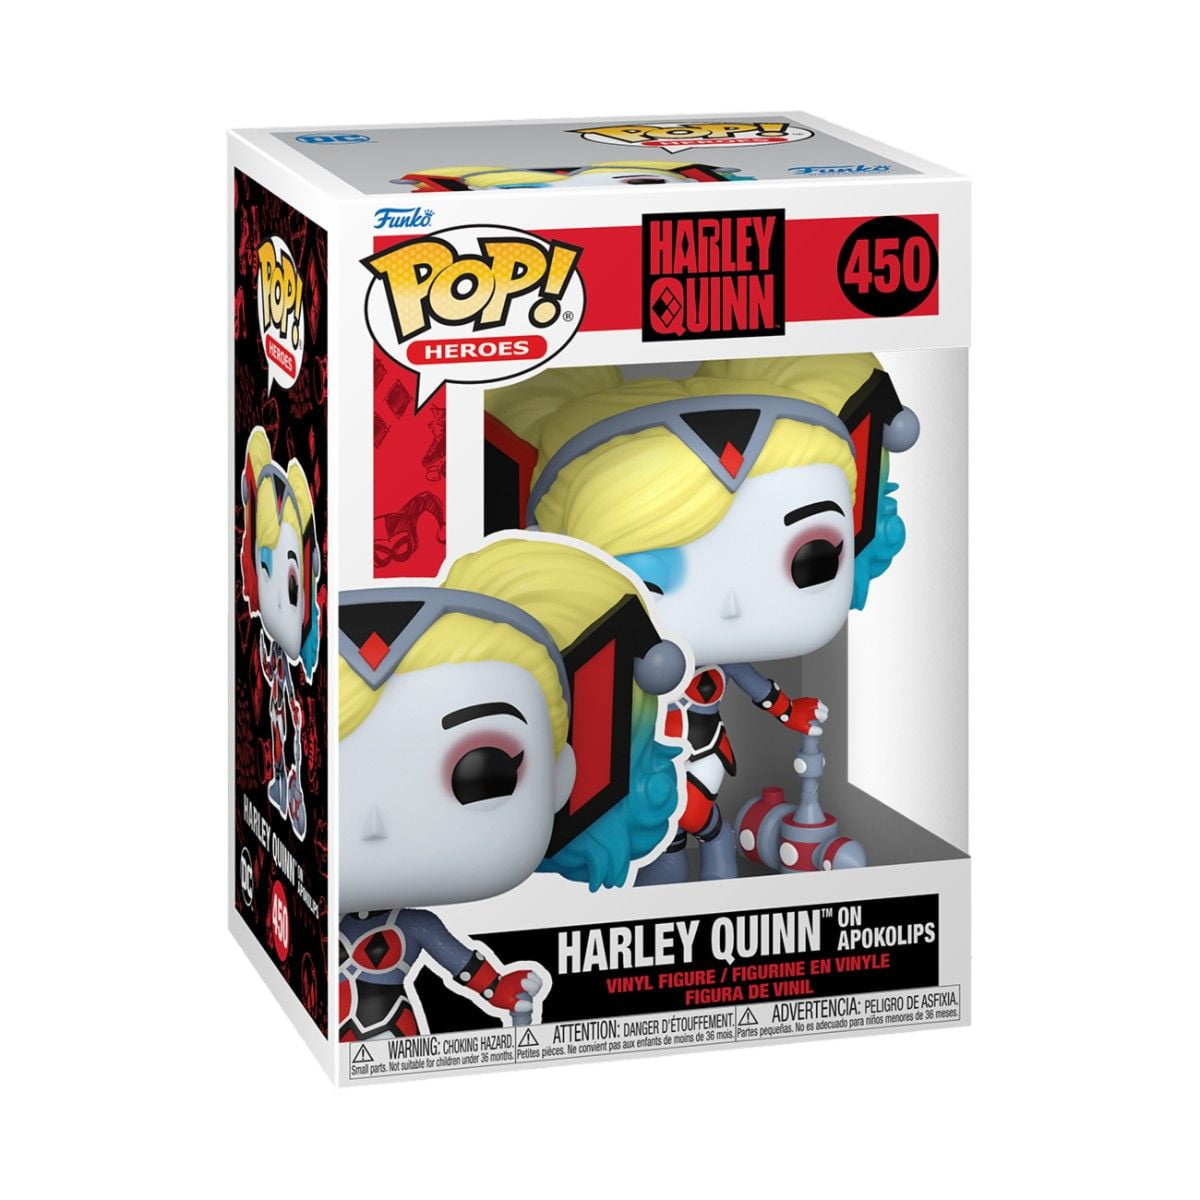 Harley (Apokolips) - DC - Funko POP! Heroes (450)